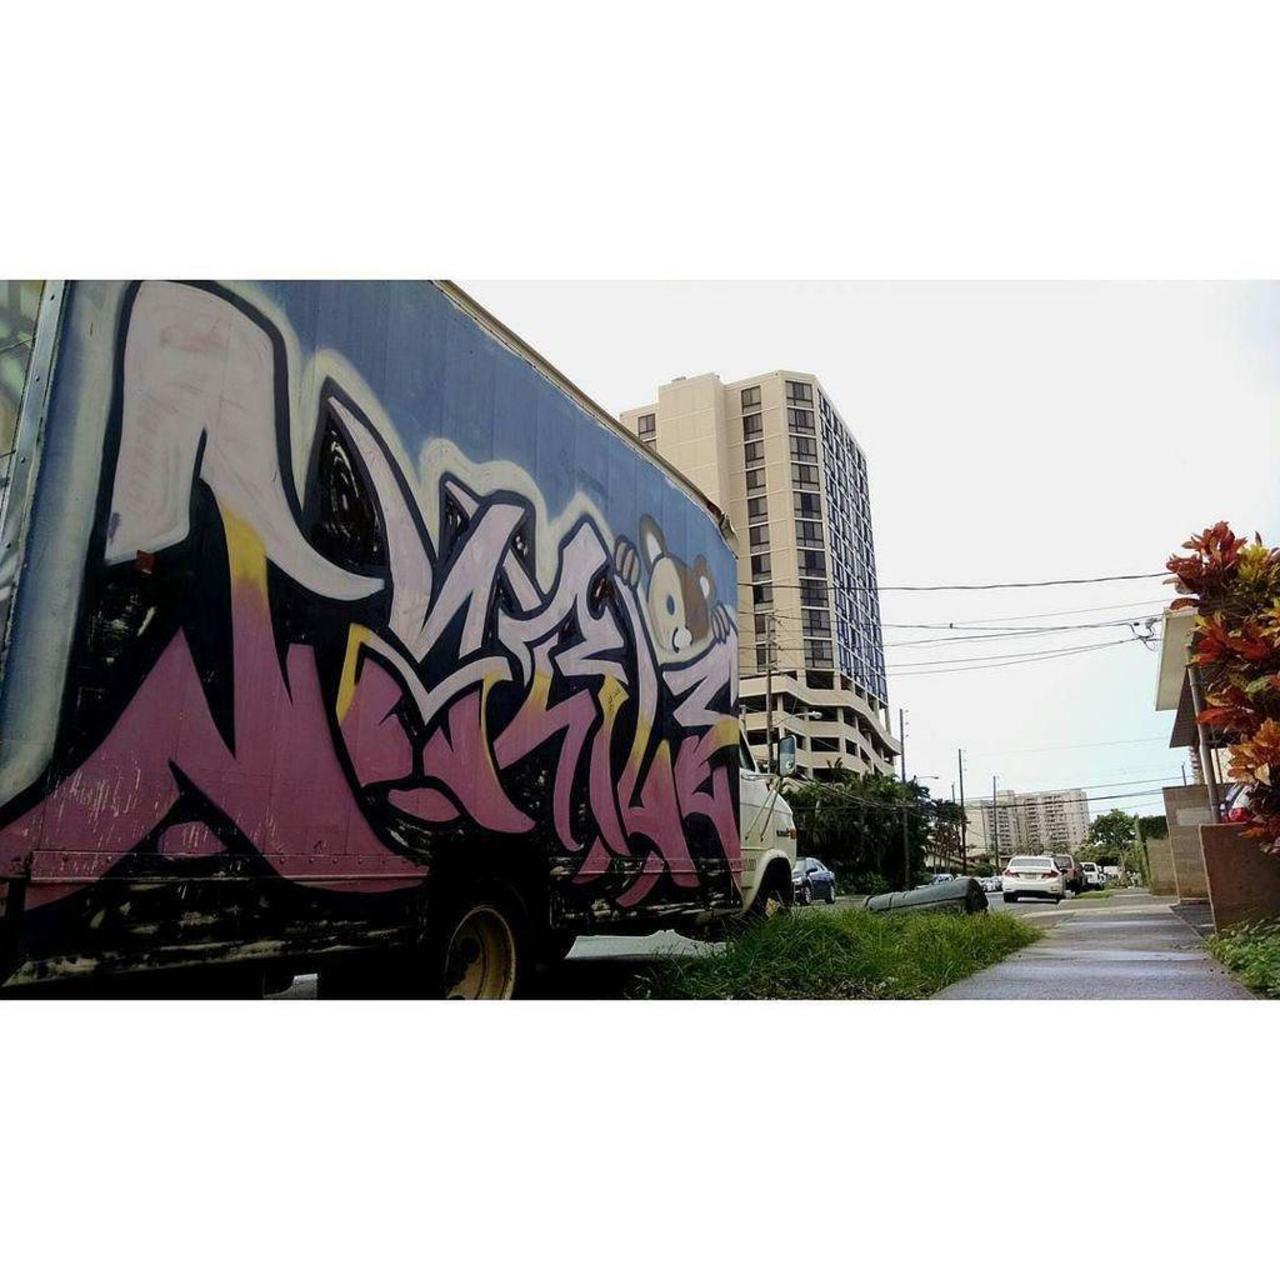 RT @artpushr: via #siete_gramz "http://bit.ly/1iPhywm" #graffiti #streetart https://t.co/H52u5gYIZP